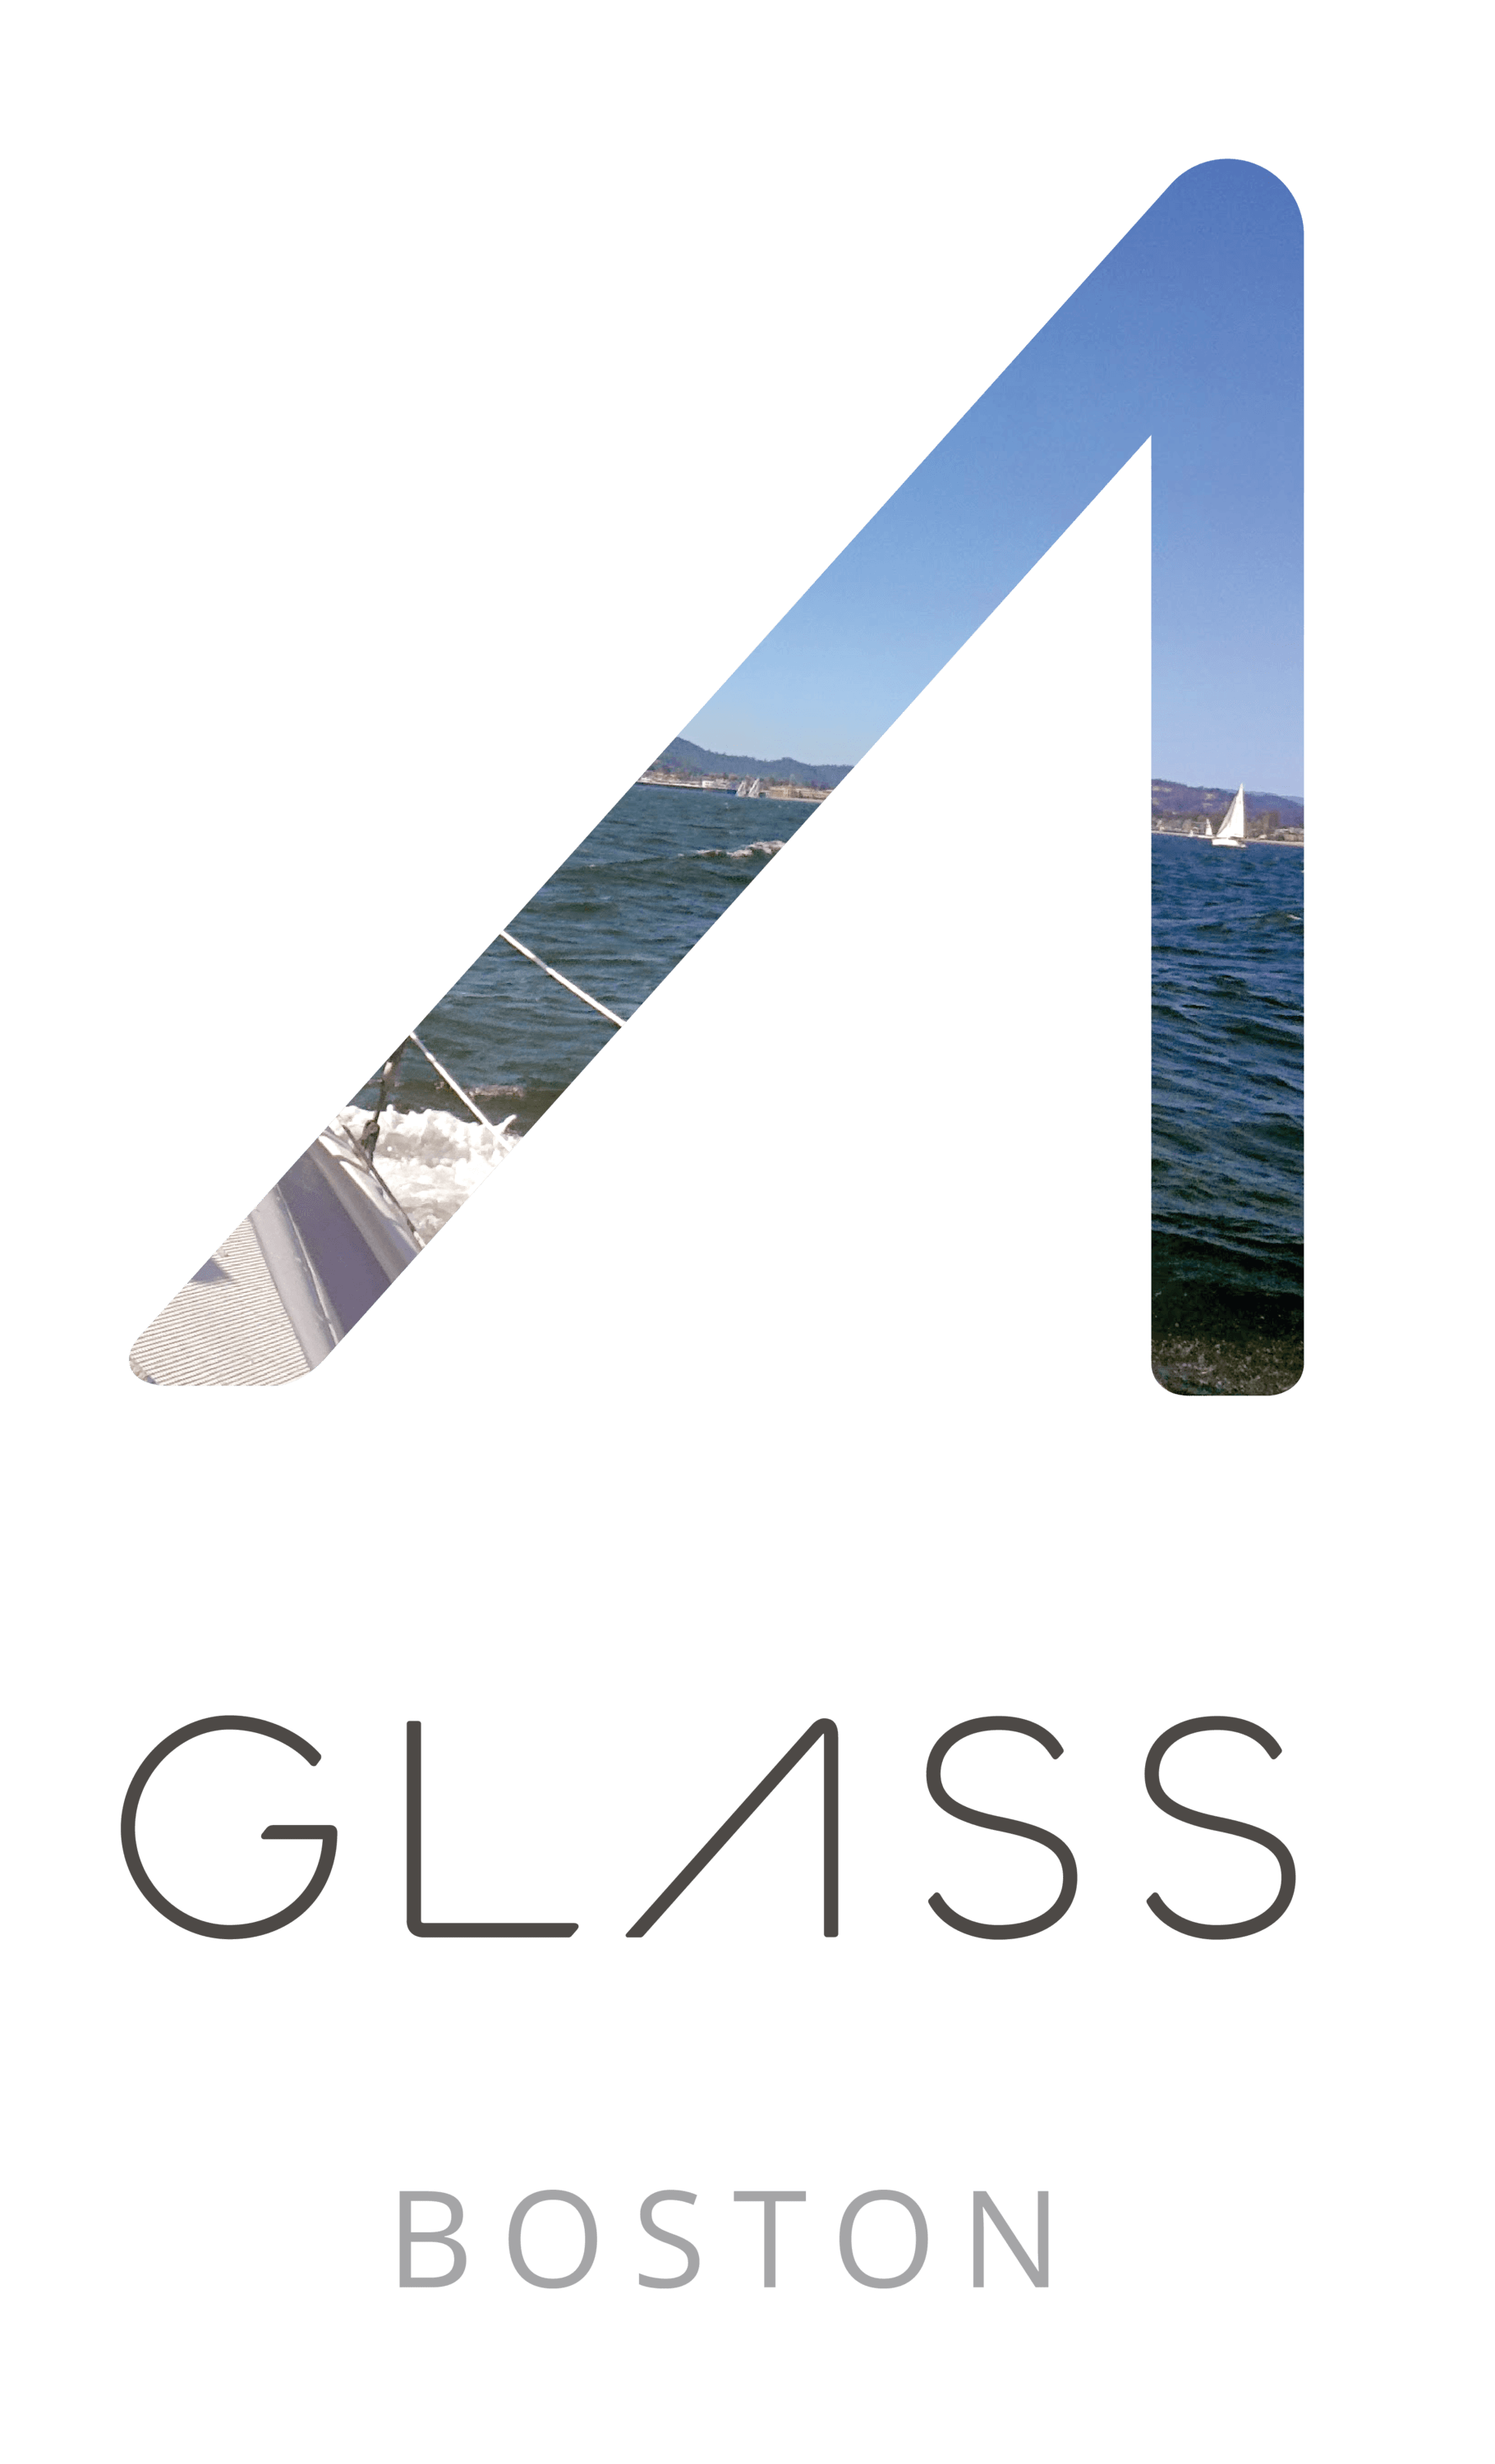 Google Glass Logo - Google Glass US tour swings by Boston, MA on July 26th